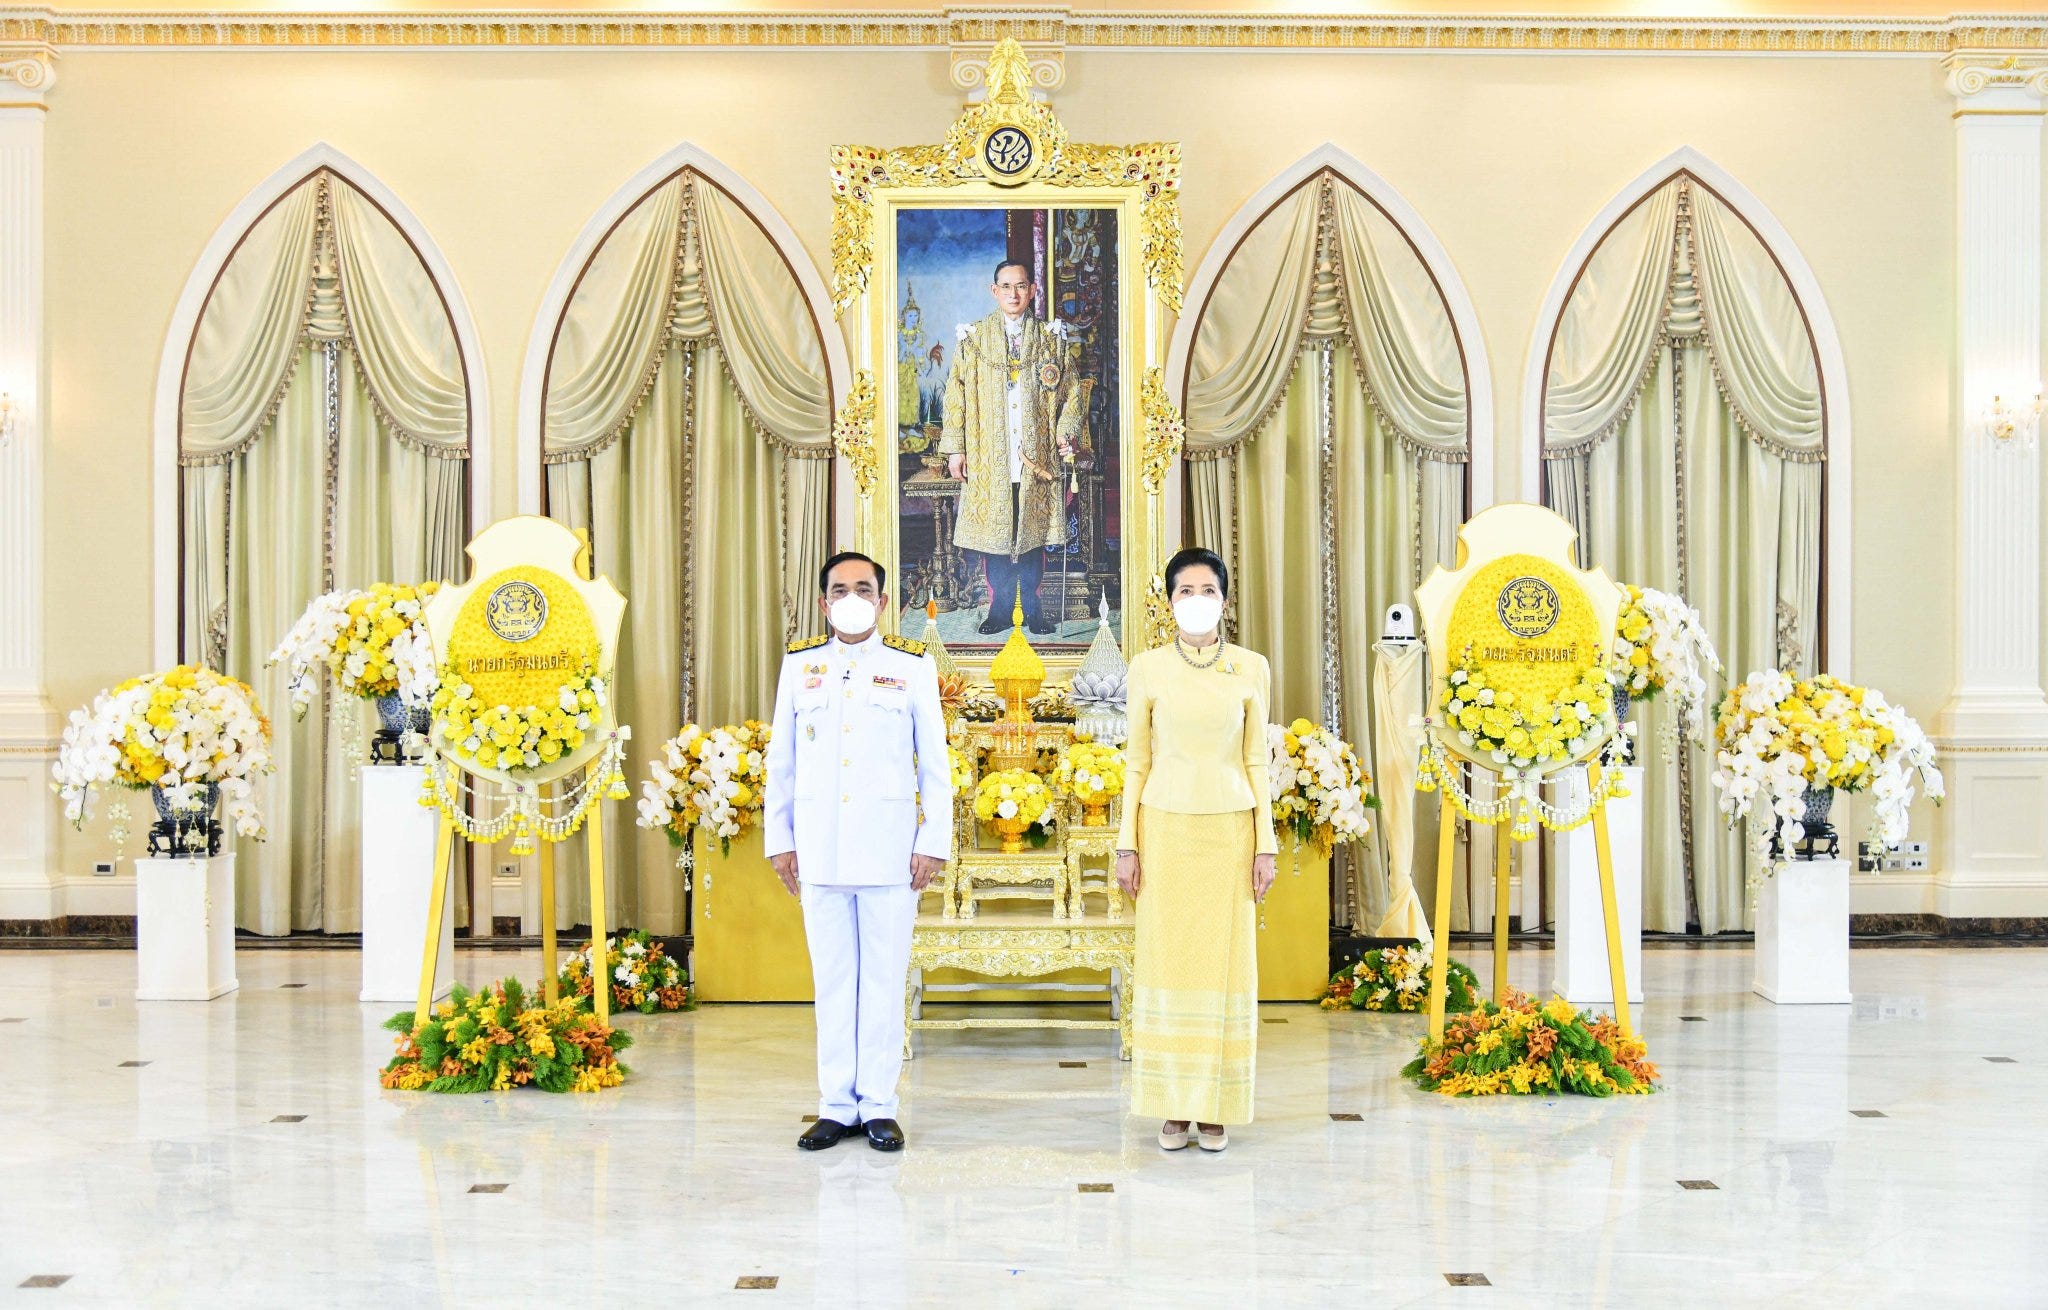 The last days of Rama IX image